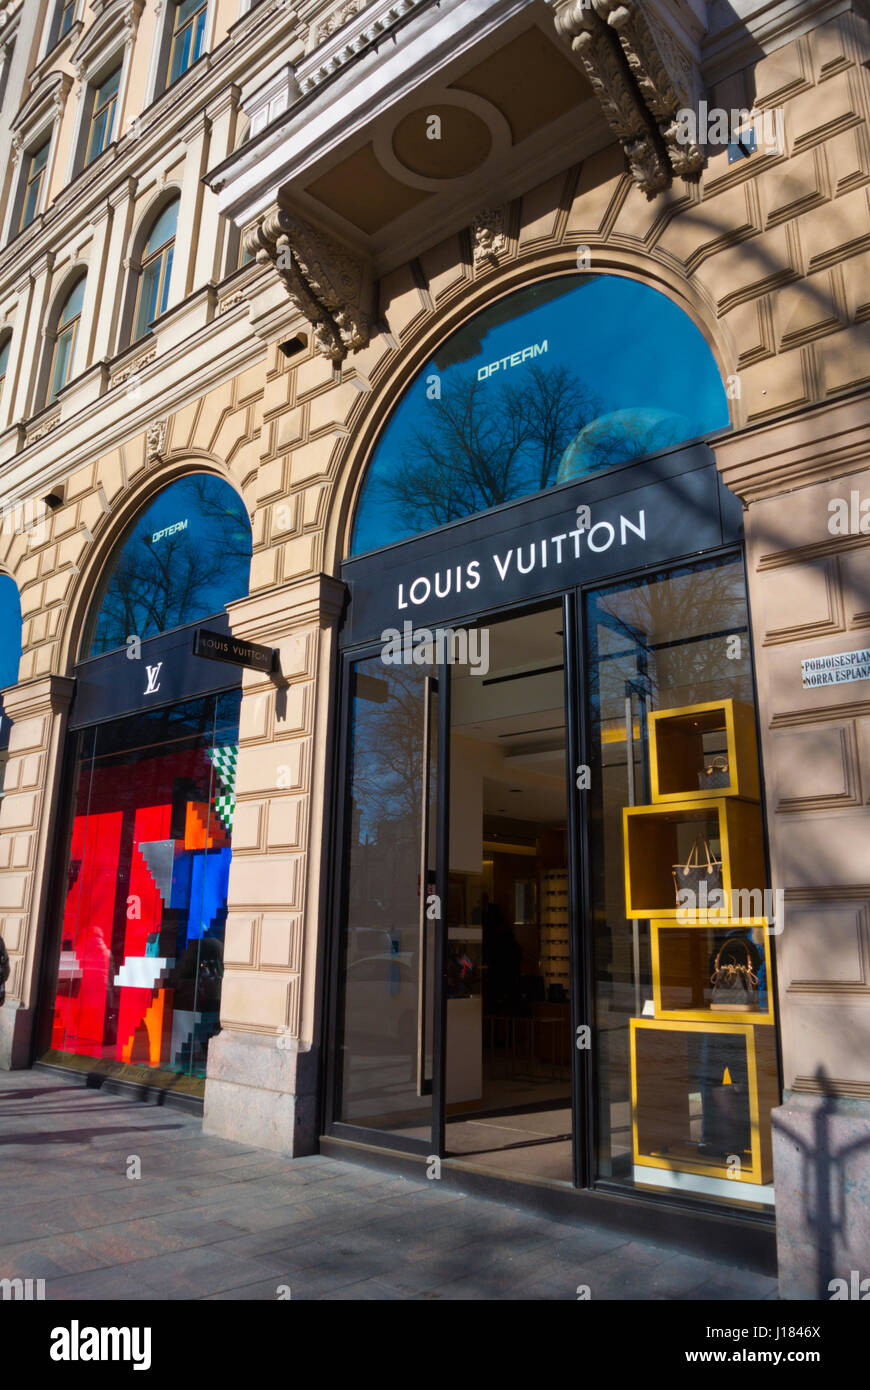 Louis Vuitton shop, Pohjoisesplanadi, esplanade street, Helsinki, Finland  Stock Photo - Alamy